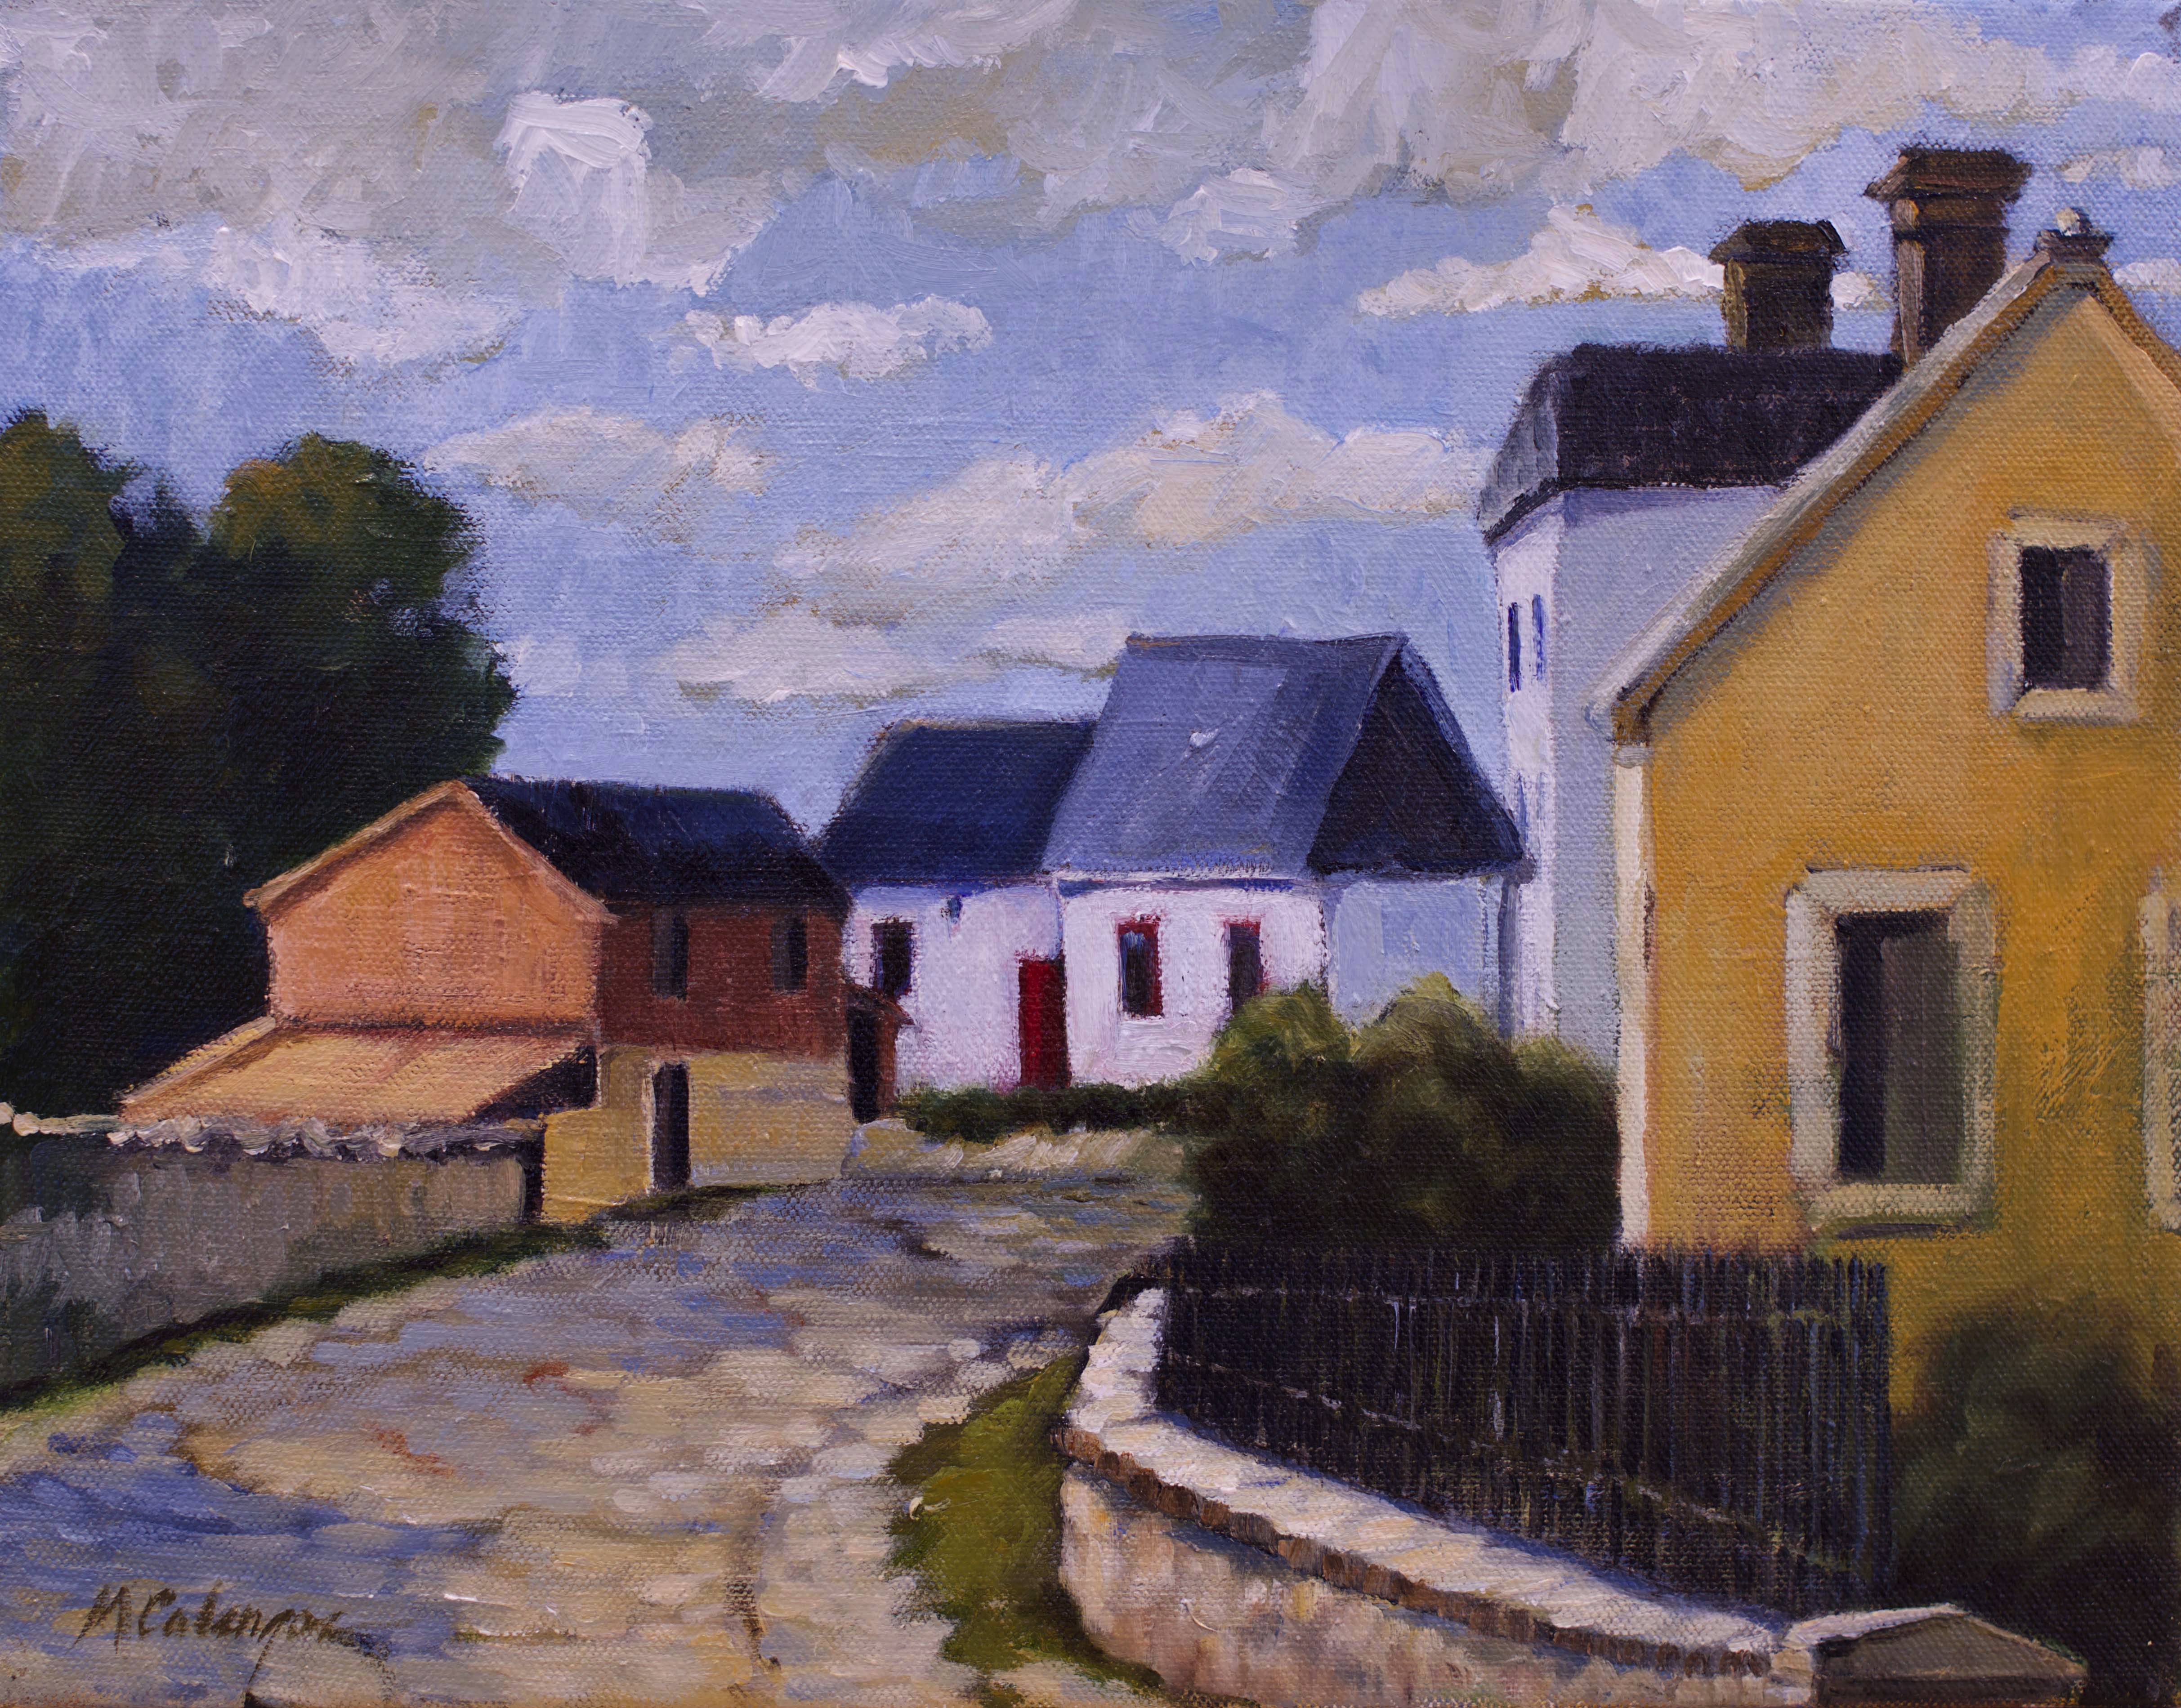 #france #impressionism #landscape #frenchvillage #oilpainting